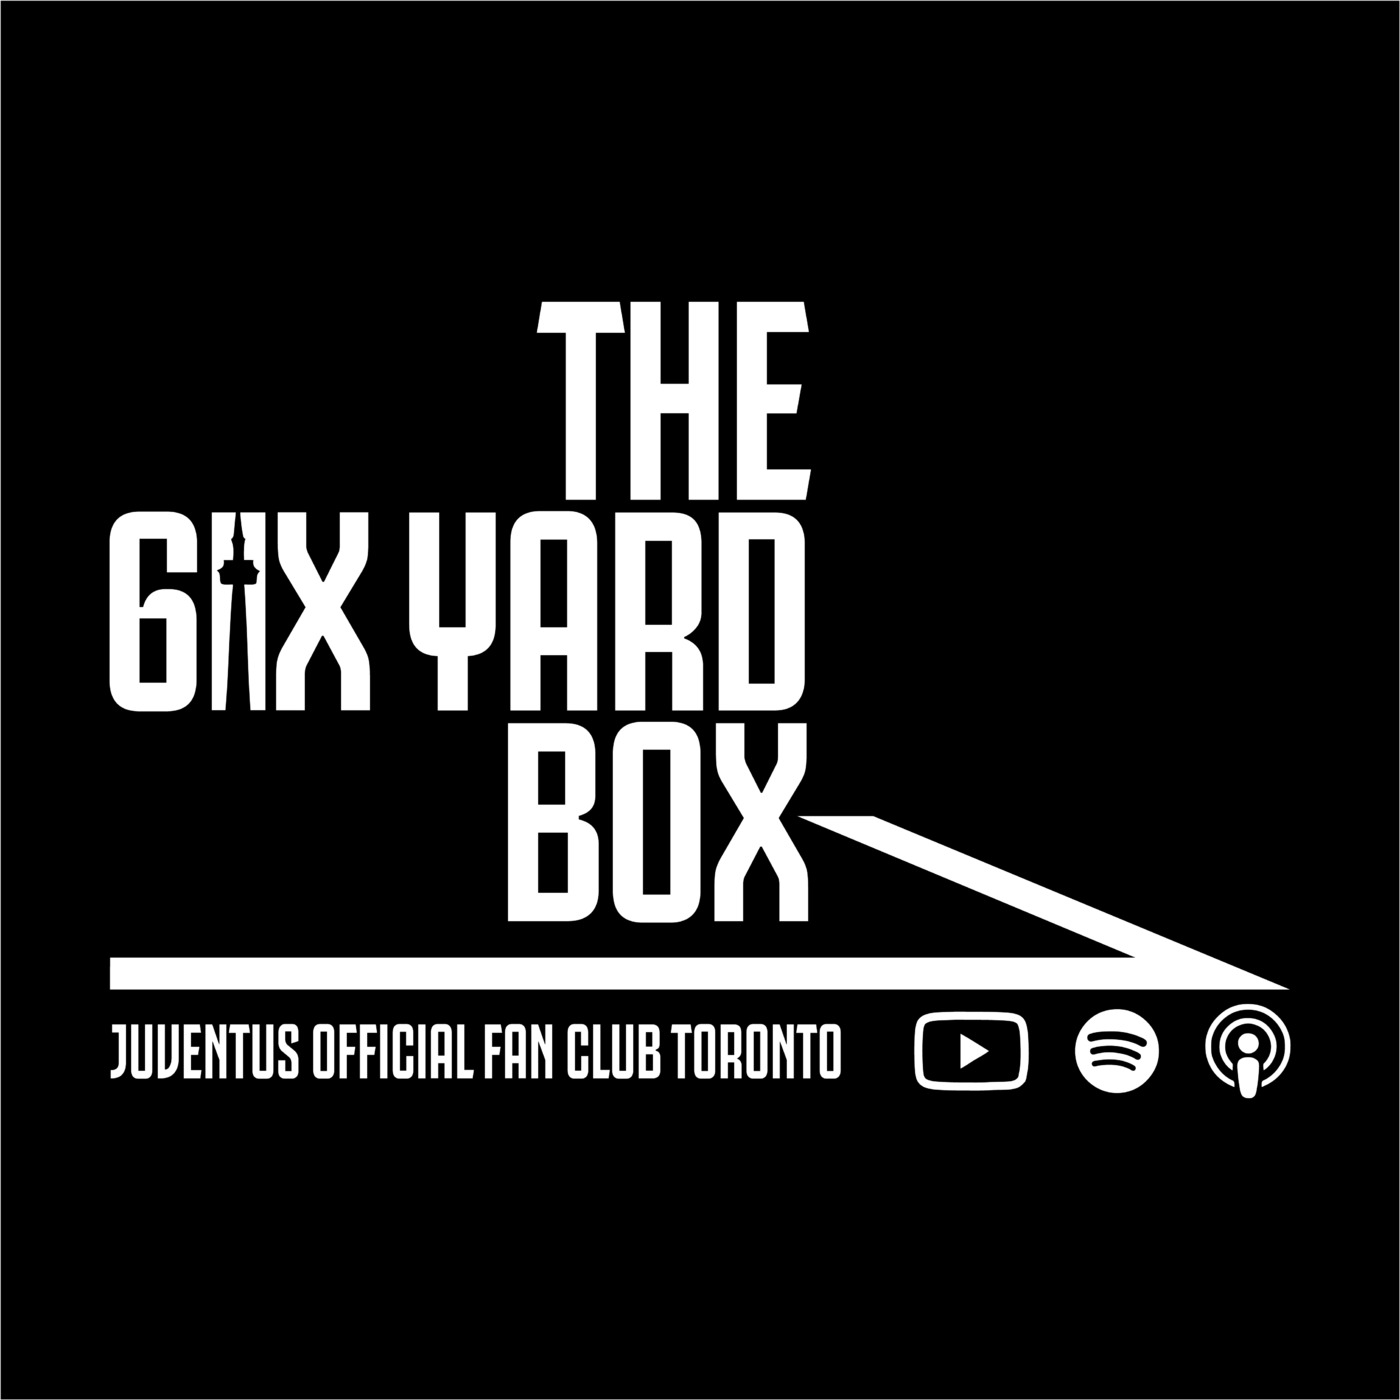 Episode 11: The 6ix Yard Box Podcast Episode 11-Champions League, Serie A, Ronaldo, TV rights feat Alf de Blasis